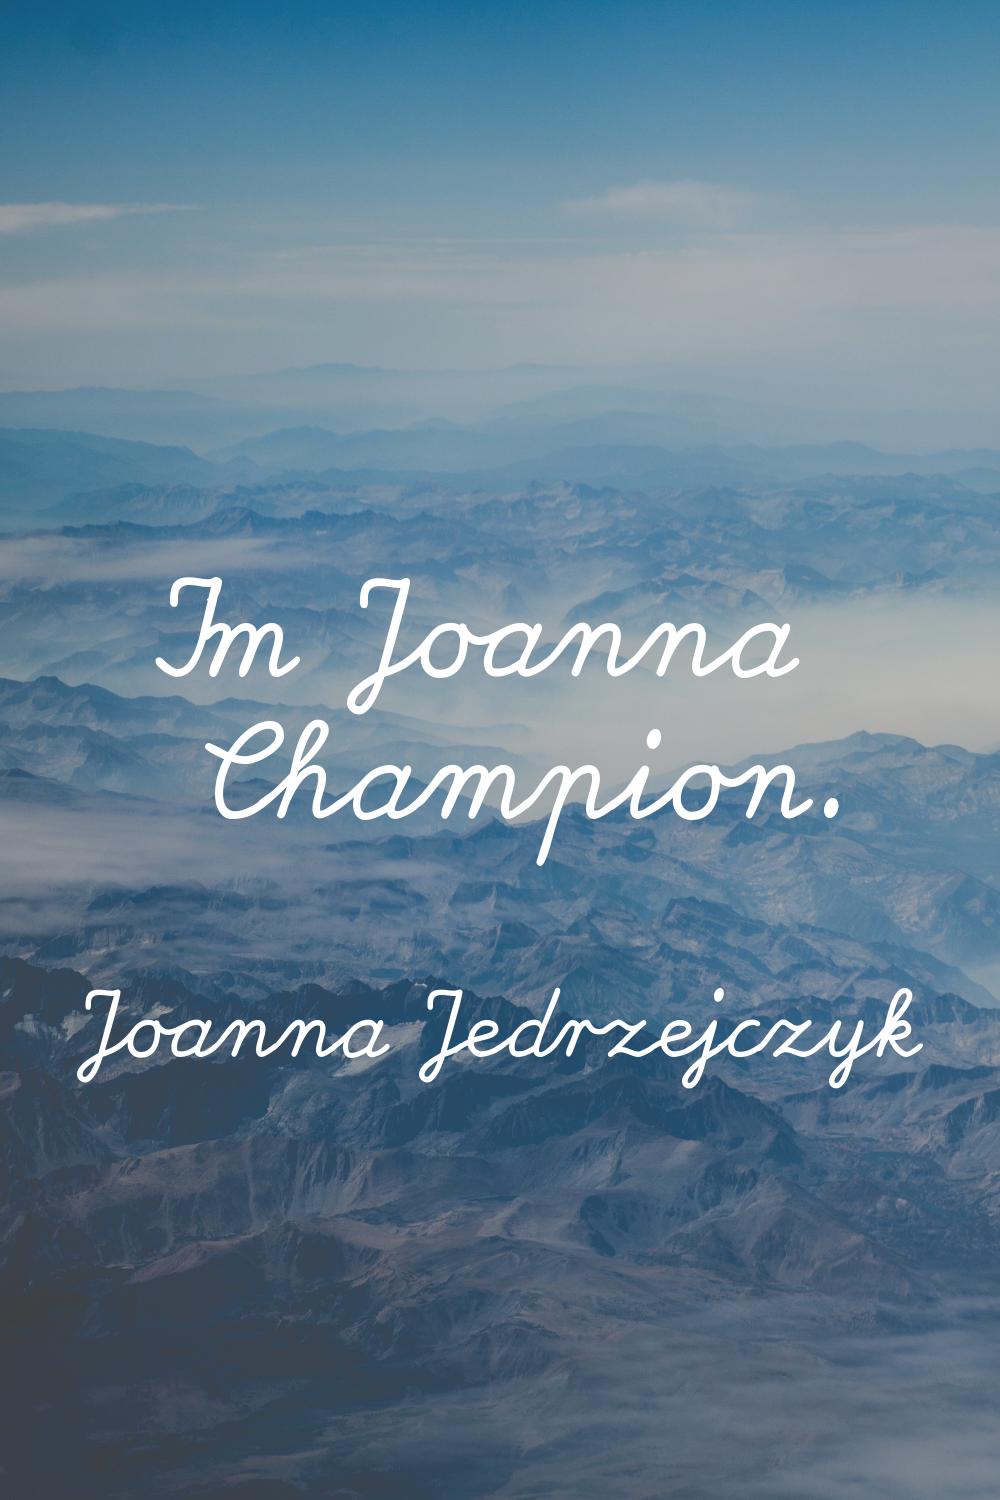 I'm Joanna Champion.